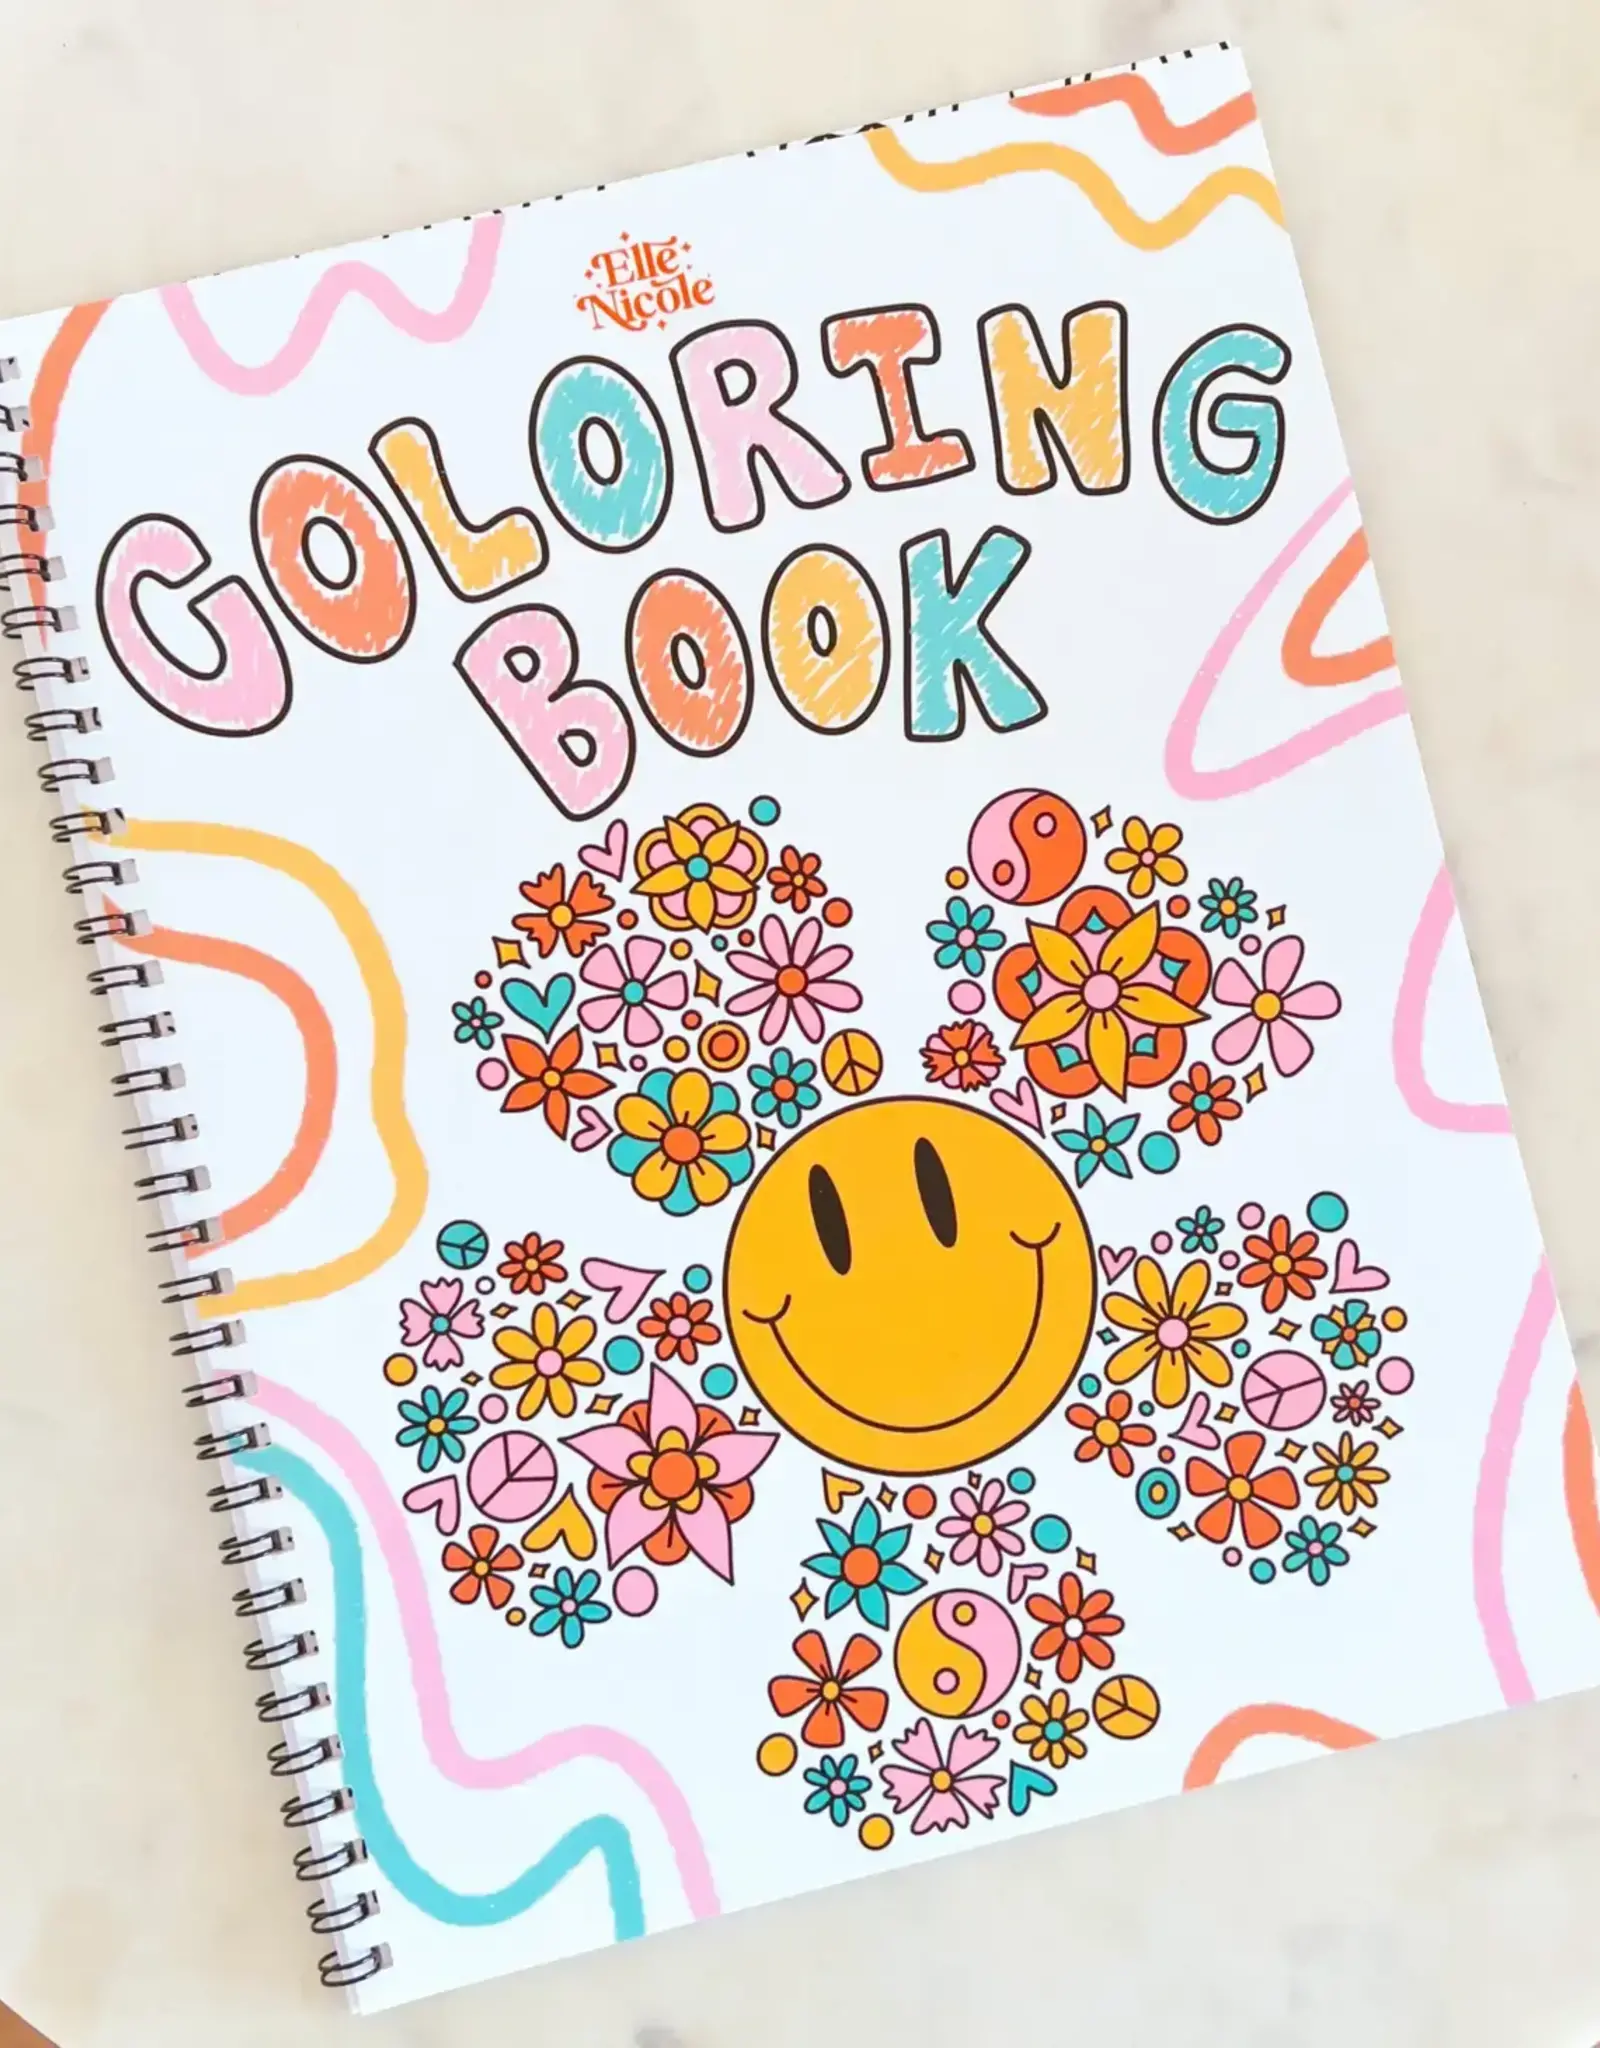 ElleNicole Coloring Book by ElleNicole